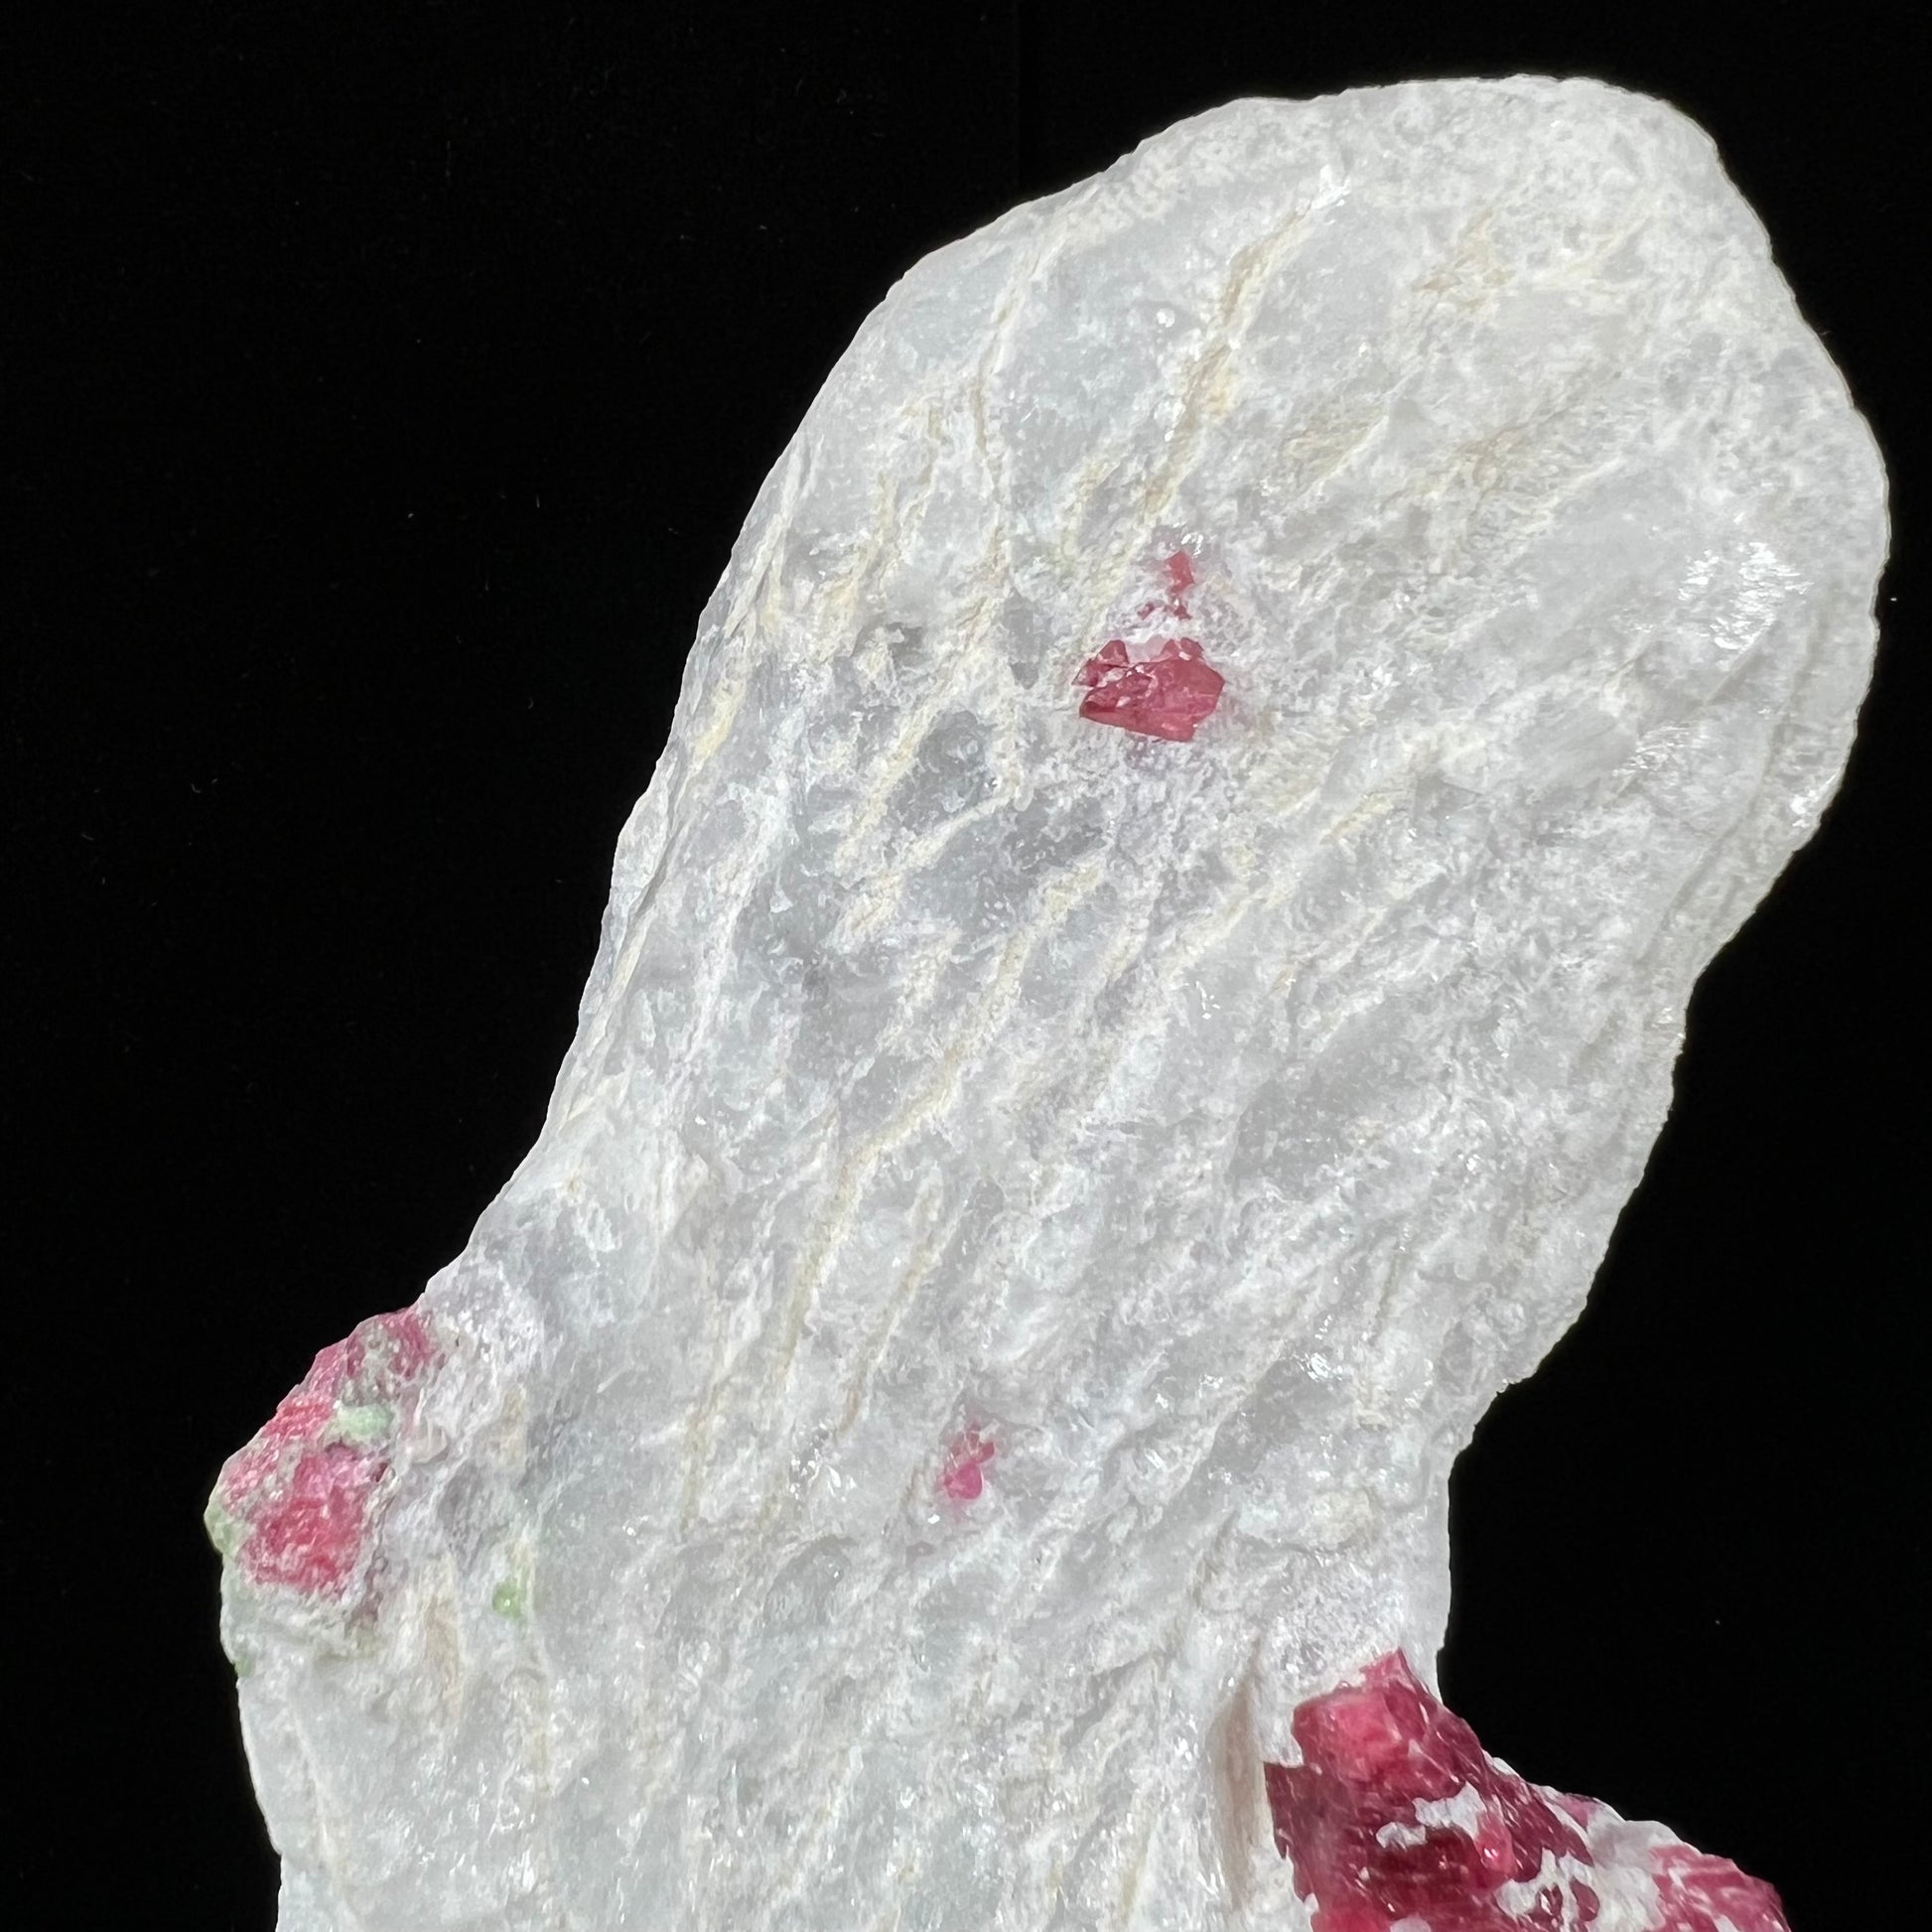 Red spinel crystals embedded in white calcite matrix from Luc Yen District, Vietnam.